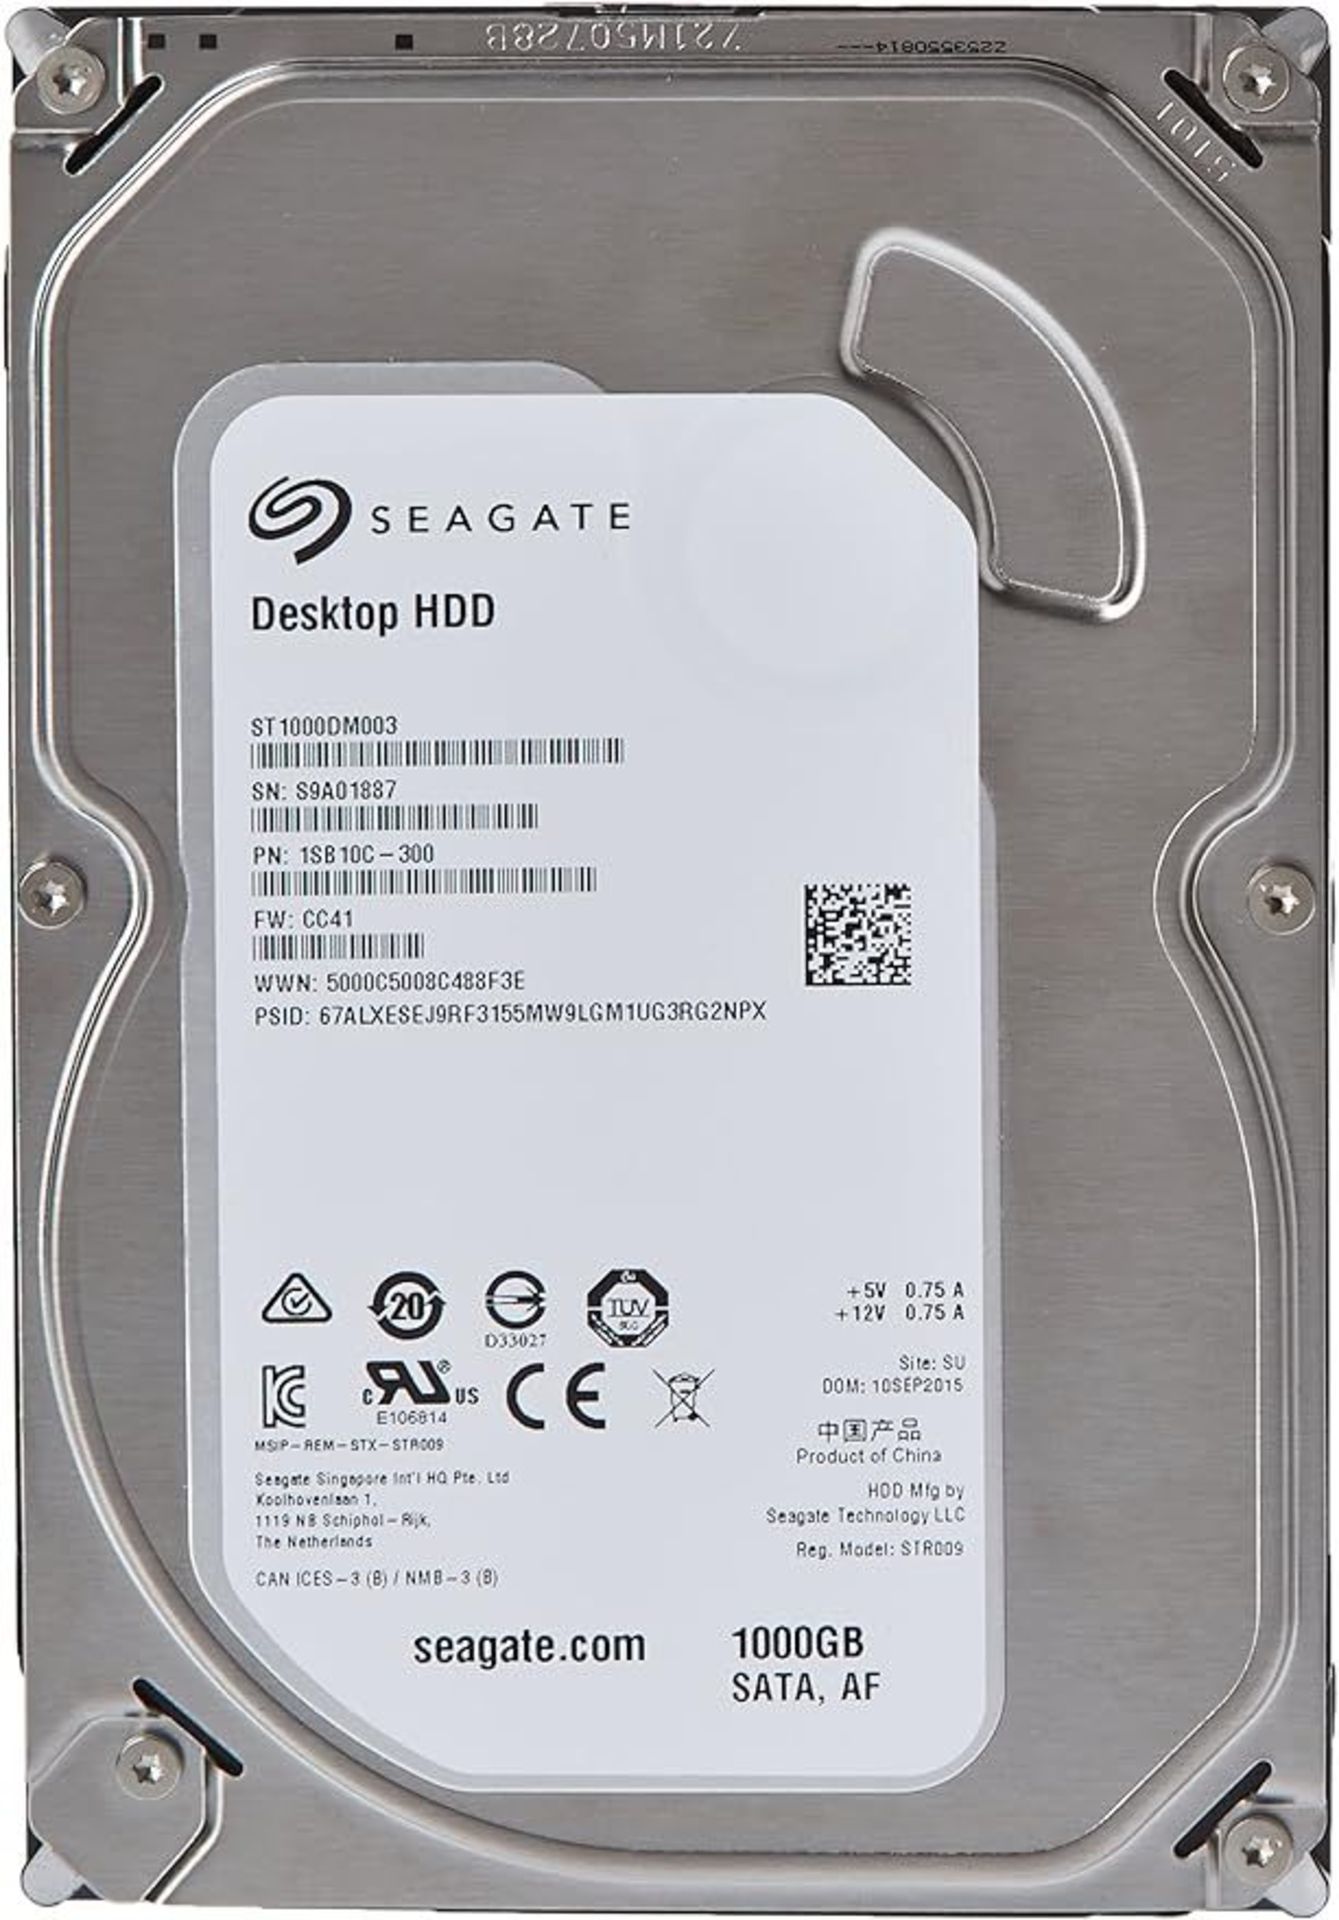 Seagate Barracuda ST1000DM003, 1TB SATA 3.5" Internal Hard Disk Drive. - P2.